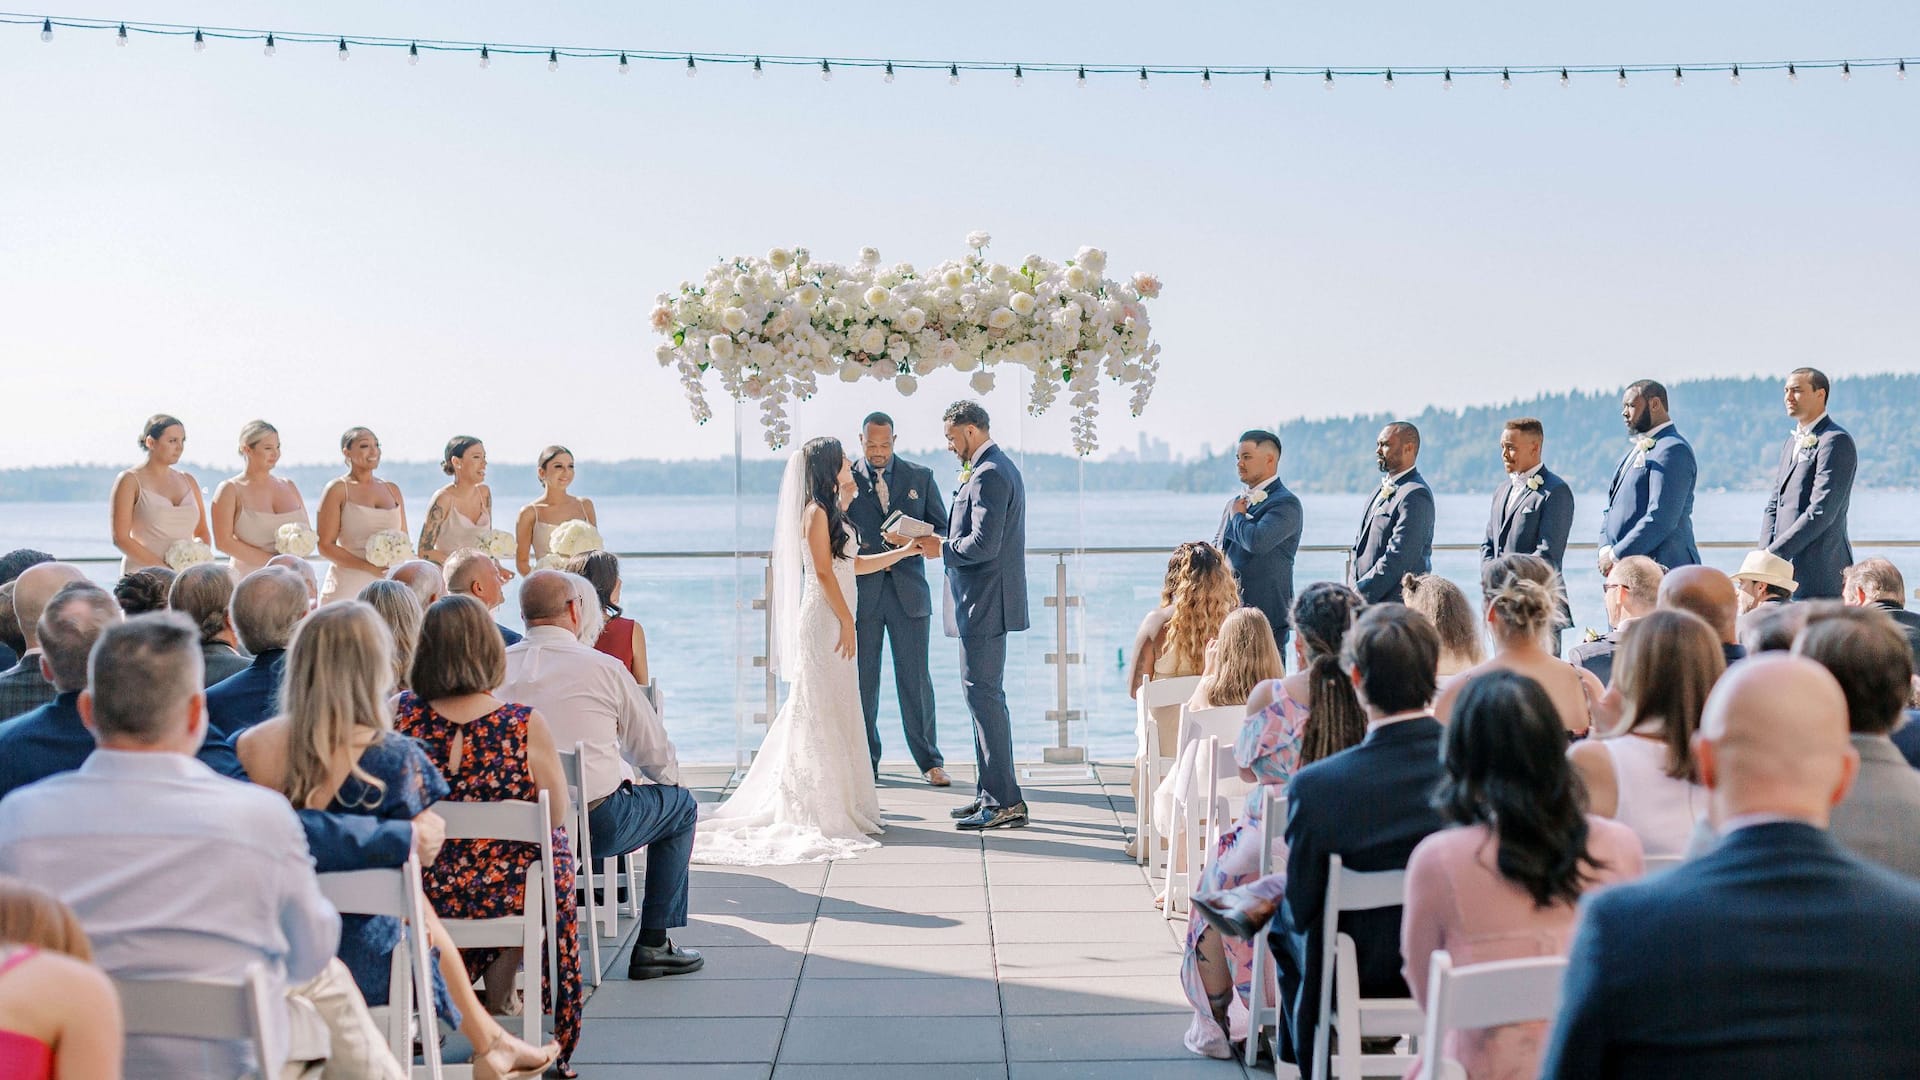 Lake Washington resort wedding ceremony setup with arch overlooking the water